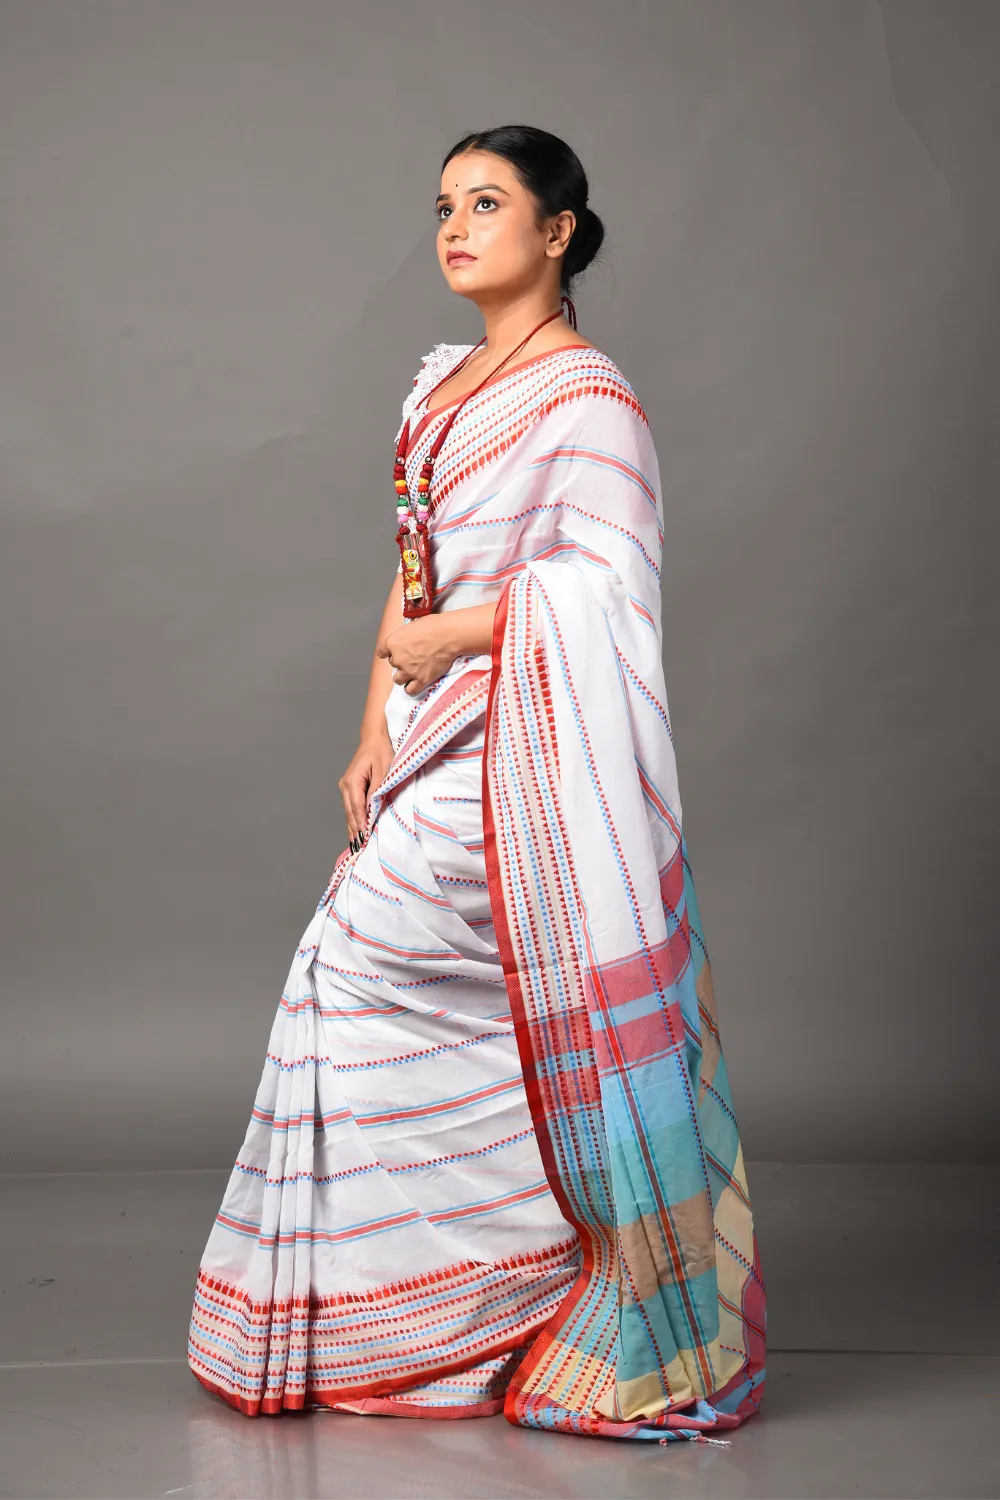 Aggregate more than 71 white khadi cotton sarees